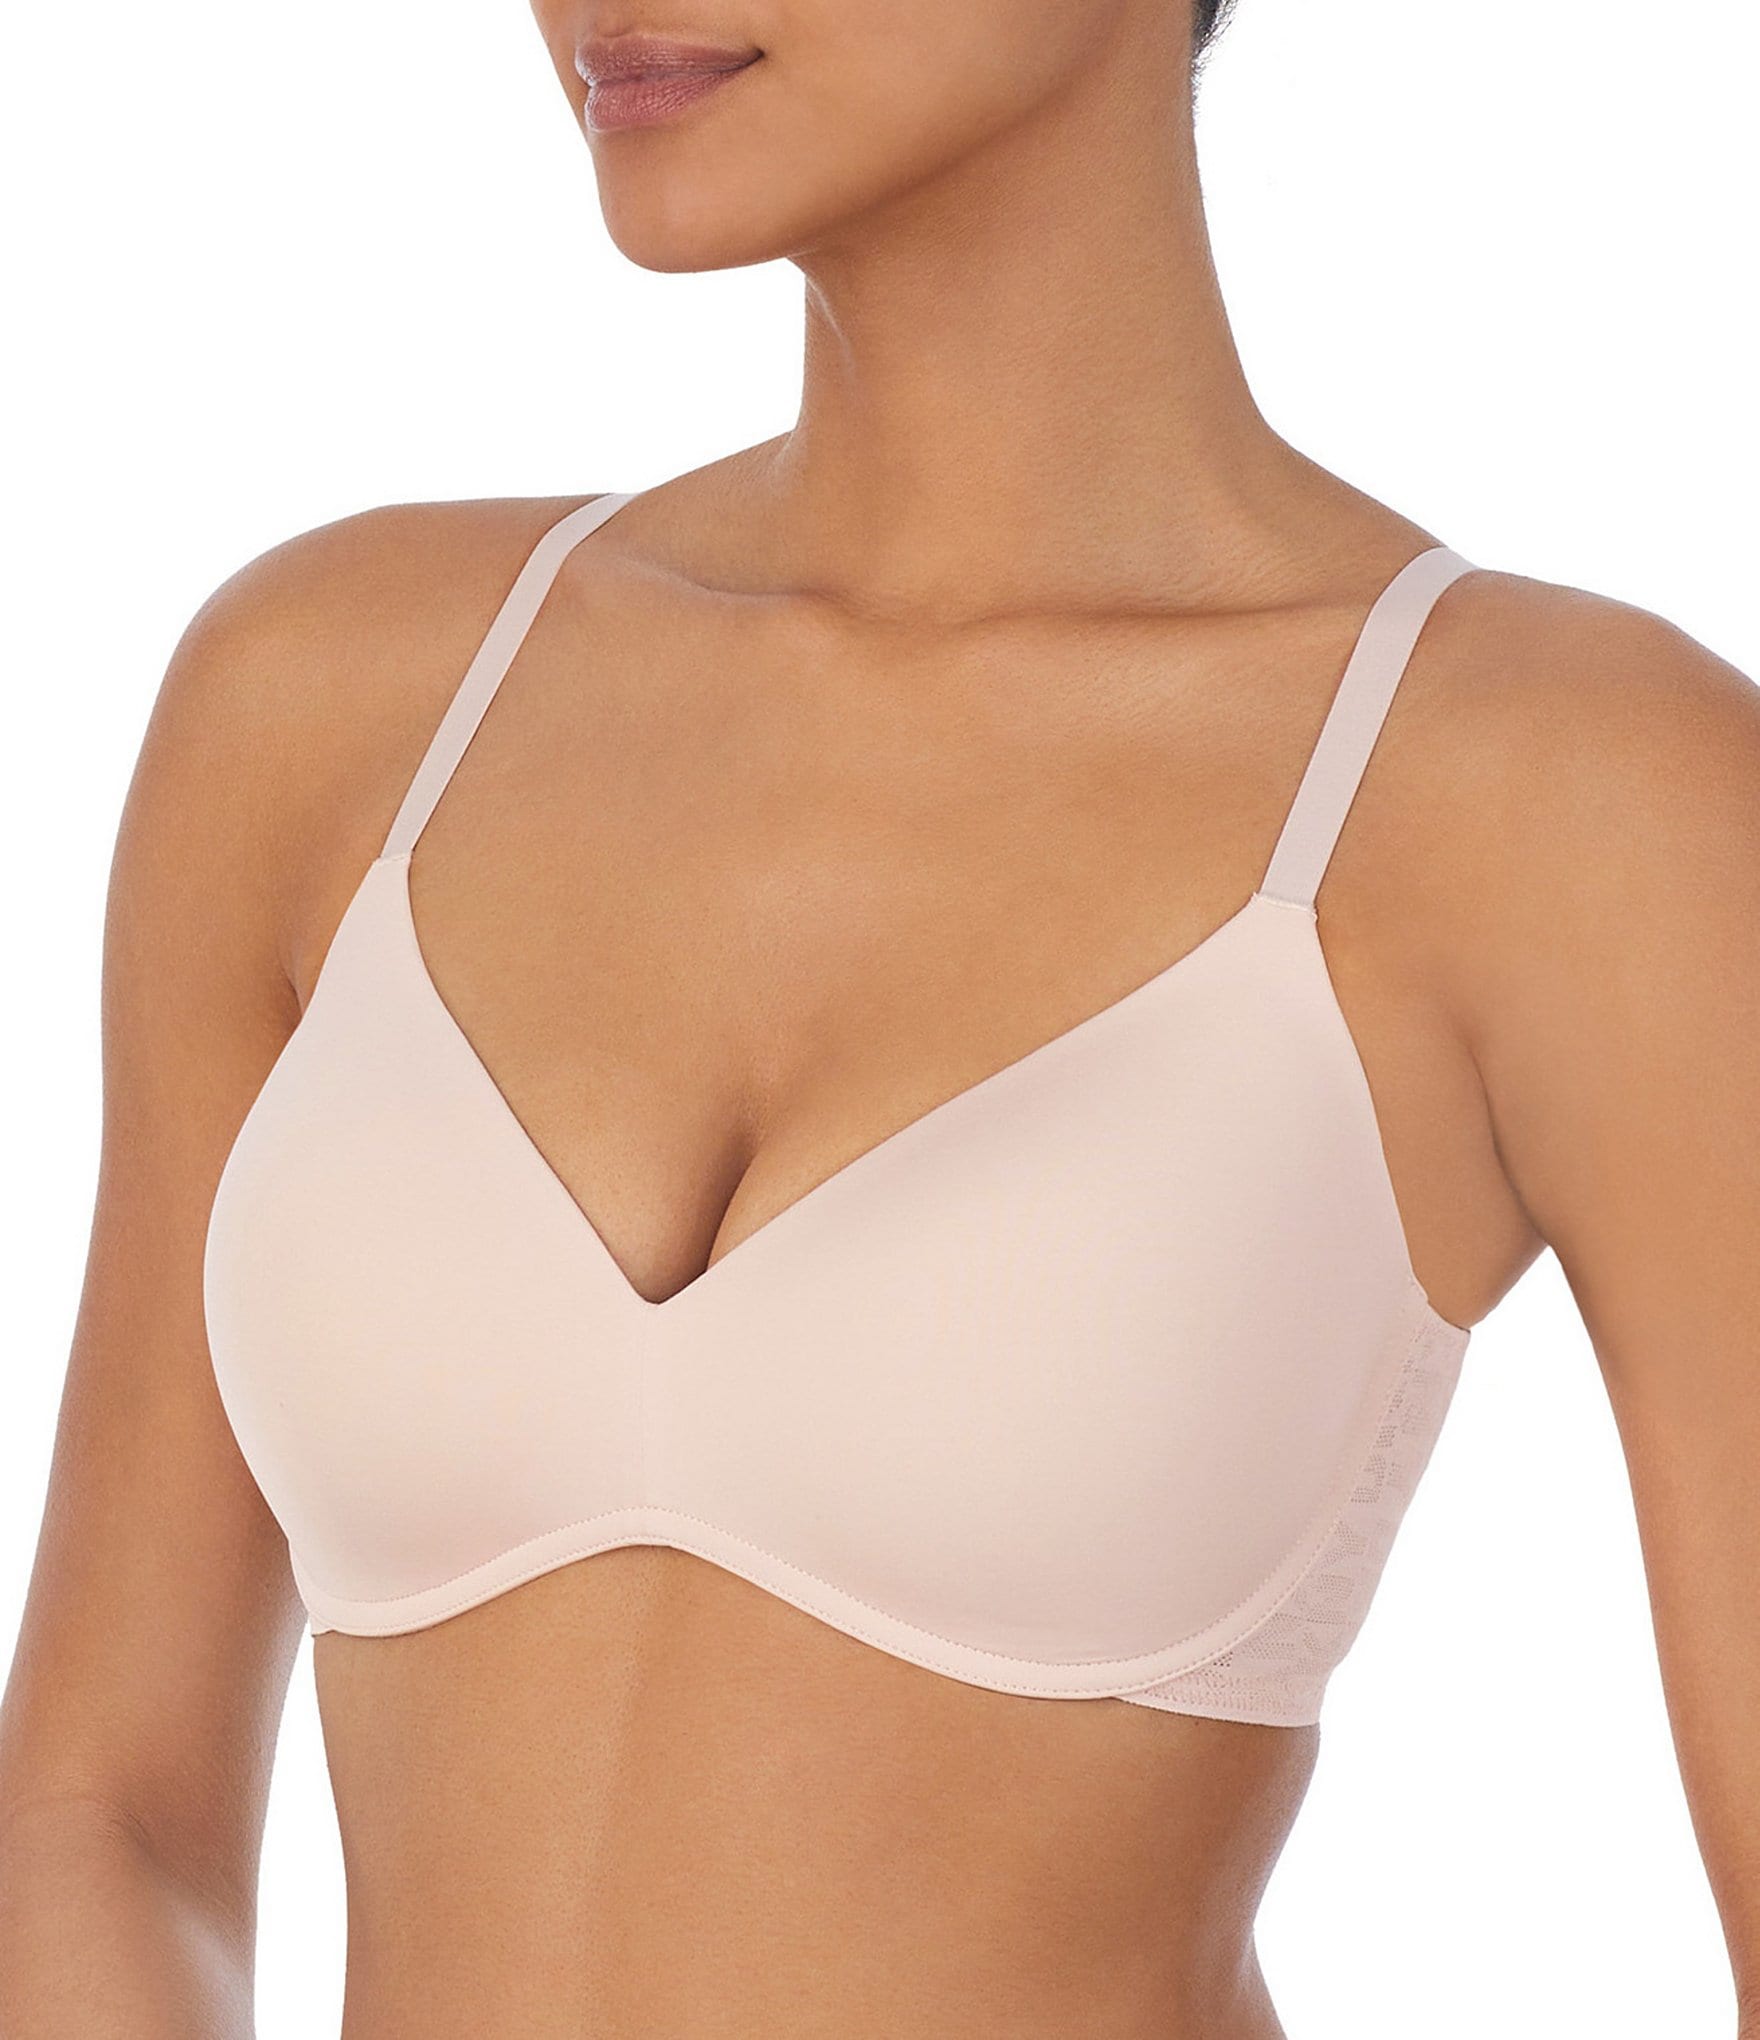 DKNY Intimates Wireless bras in Sale for women